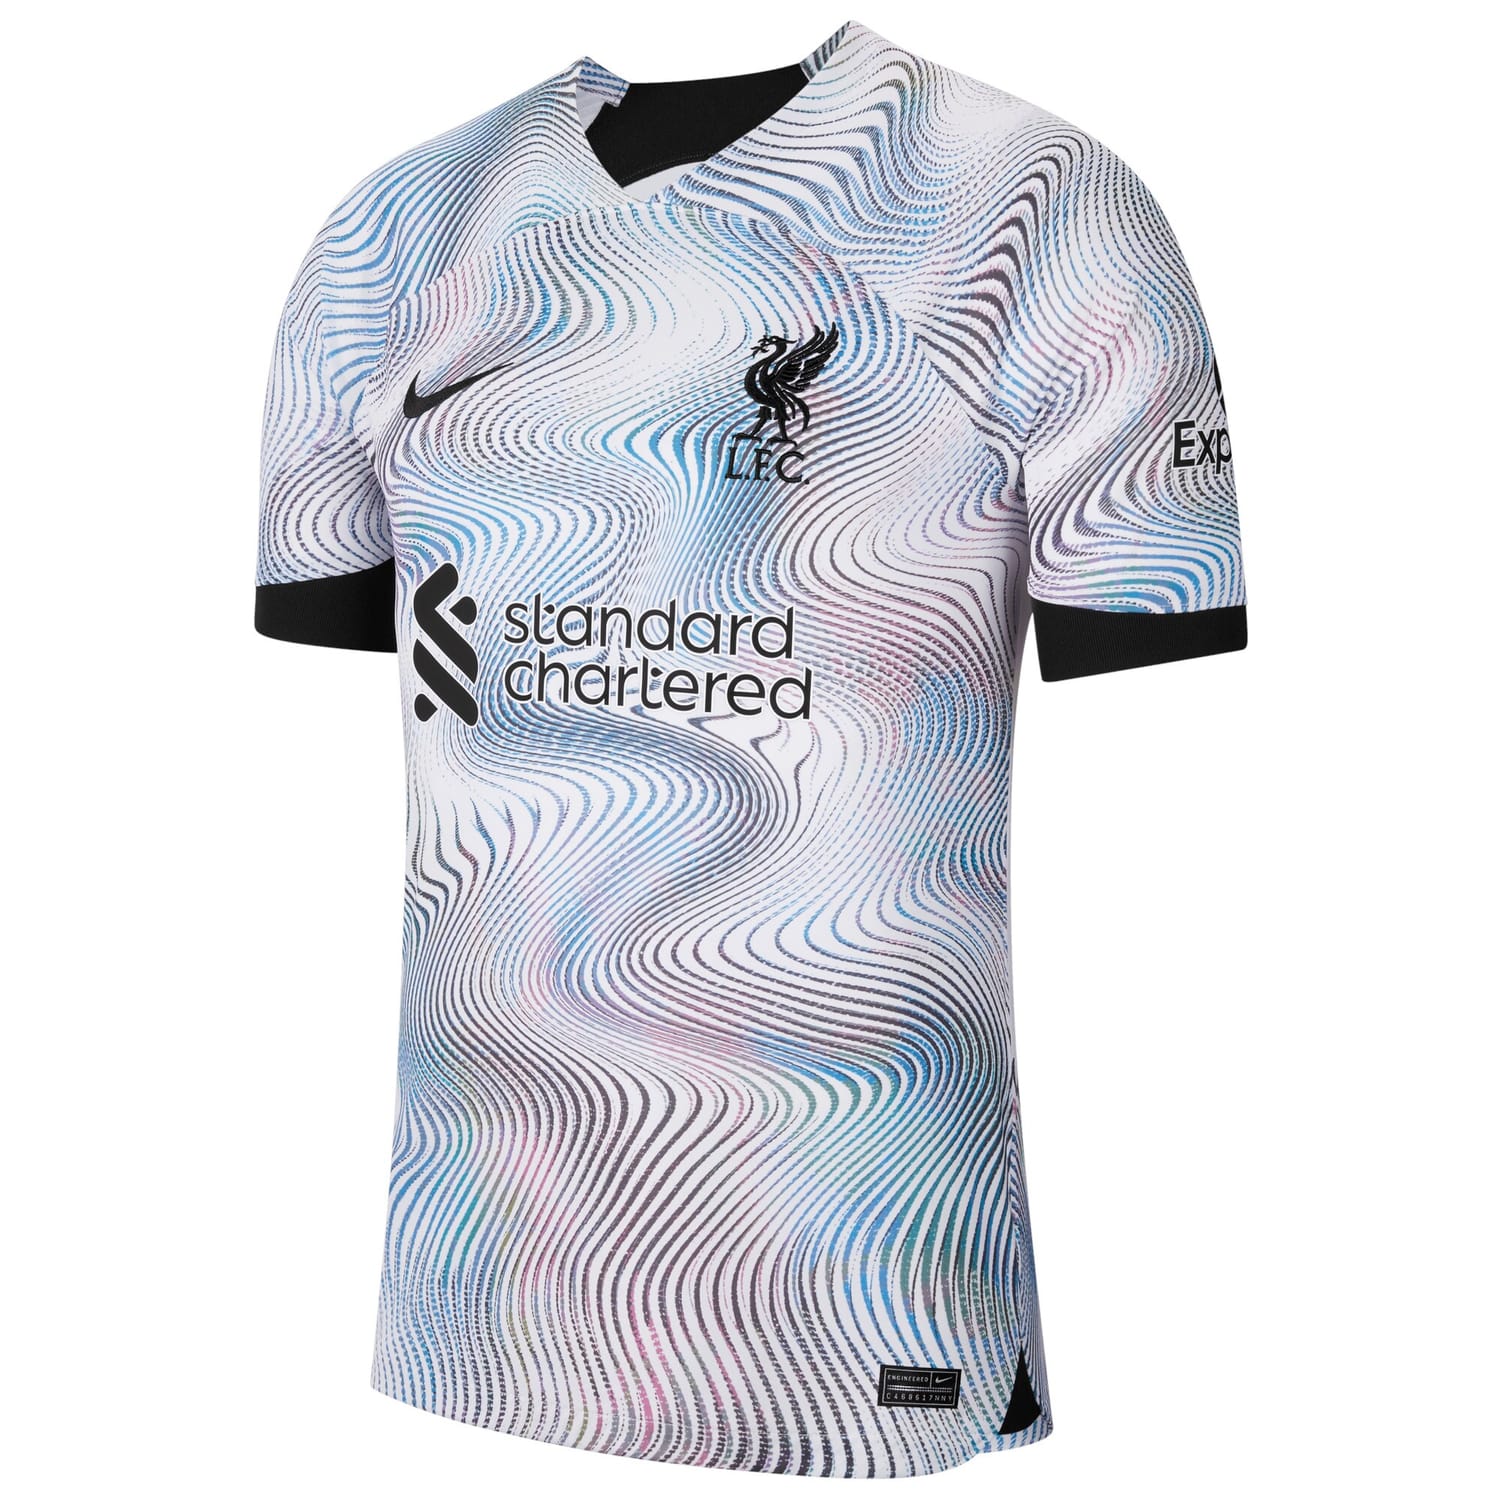 Premier League Liverpool Away Jersey Shirt 2022-23 player Milner 7 printing for Men